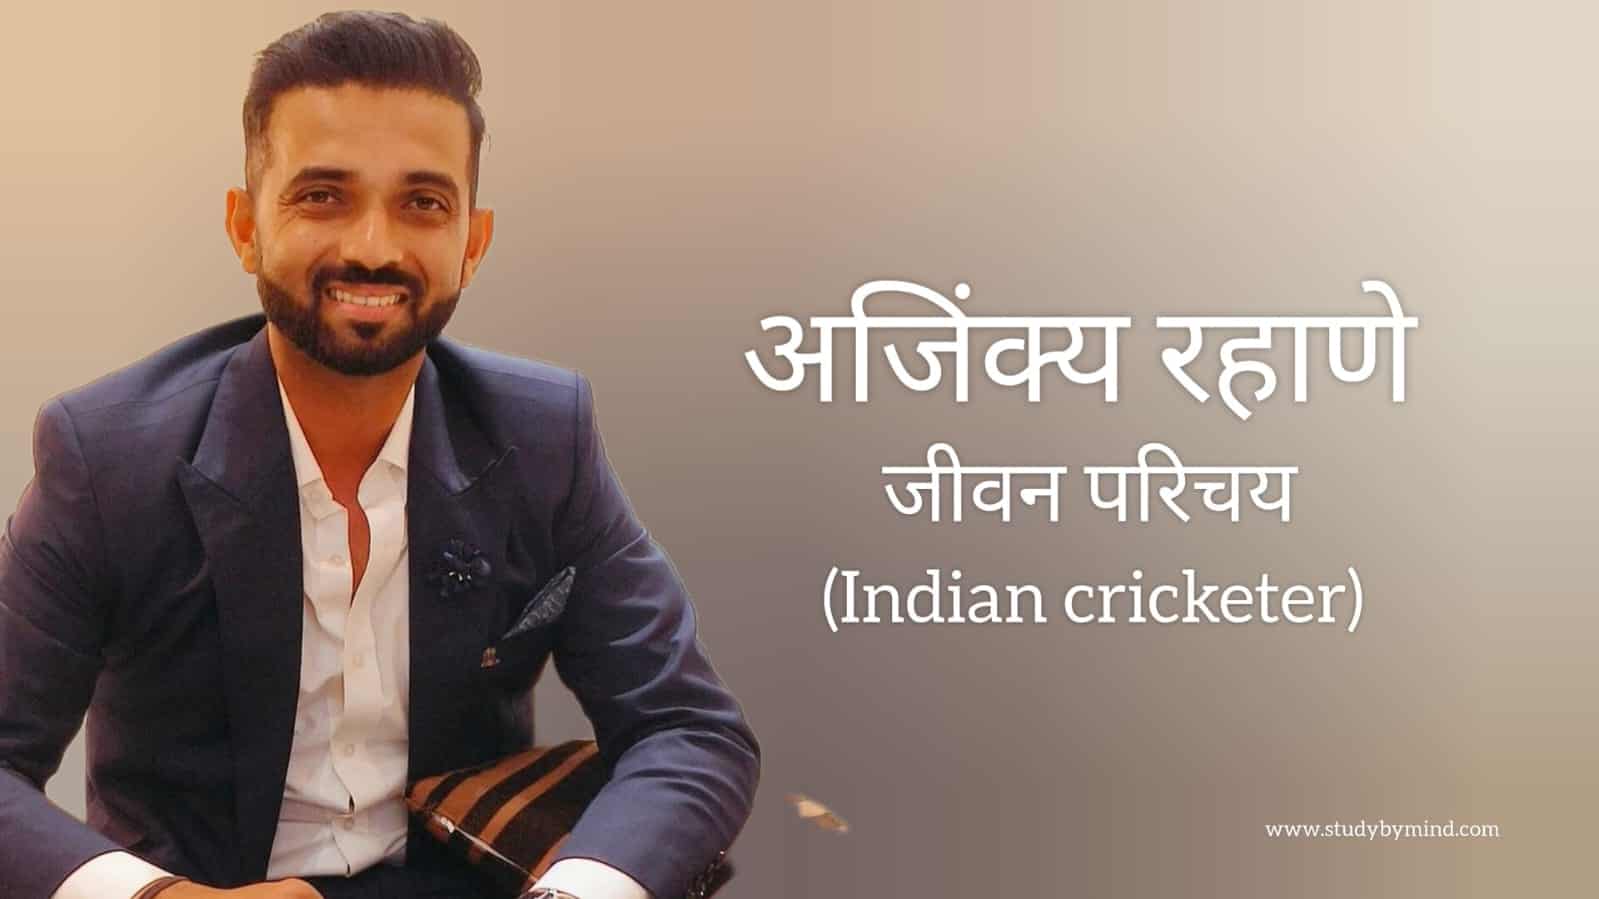 You are currently viewing अजिंक्य रहाणे जीवन परिचय Ajinkya rahane biography in hindi (भारतीय क्रिकेटर)